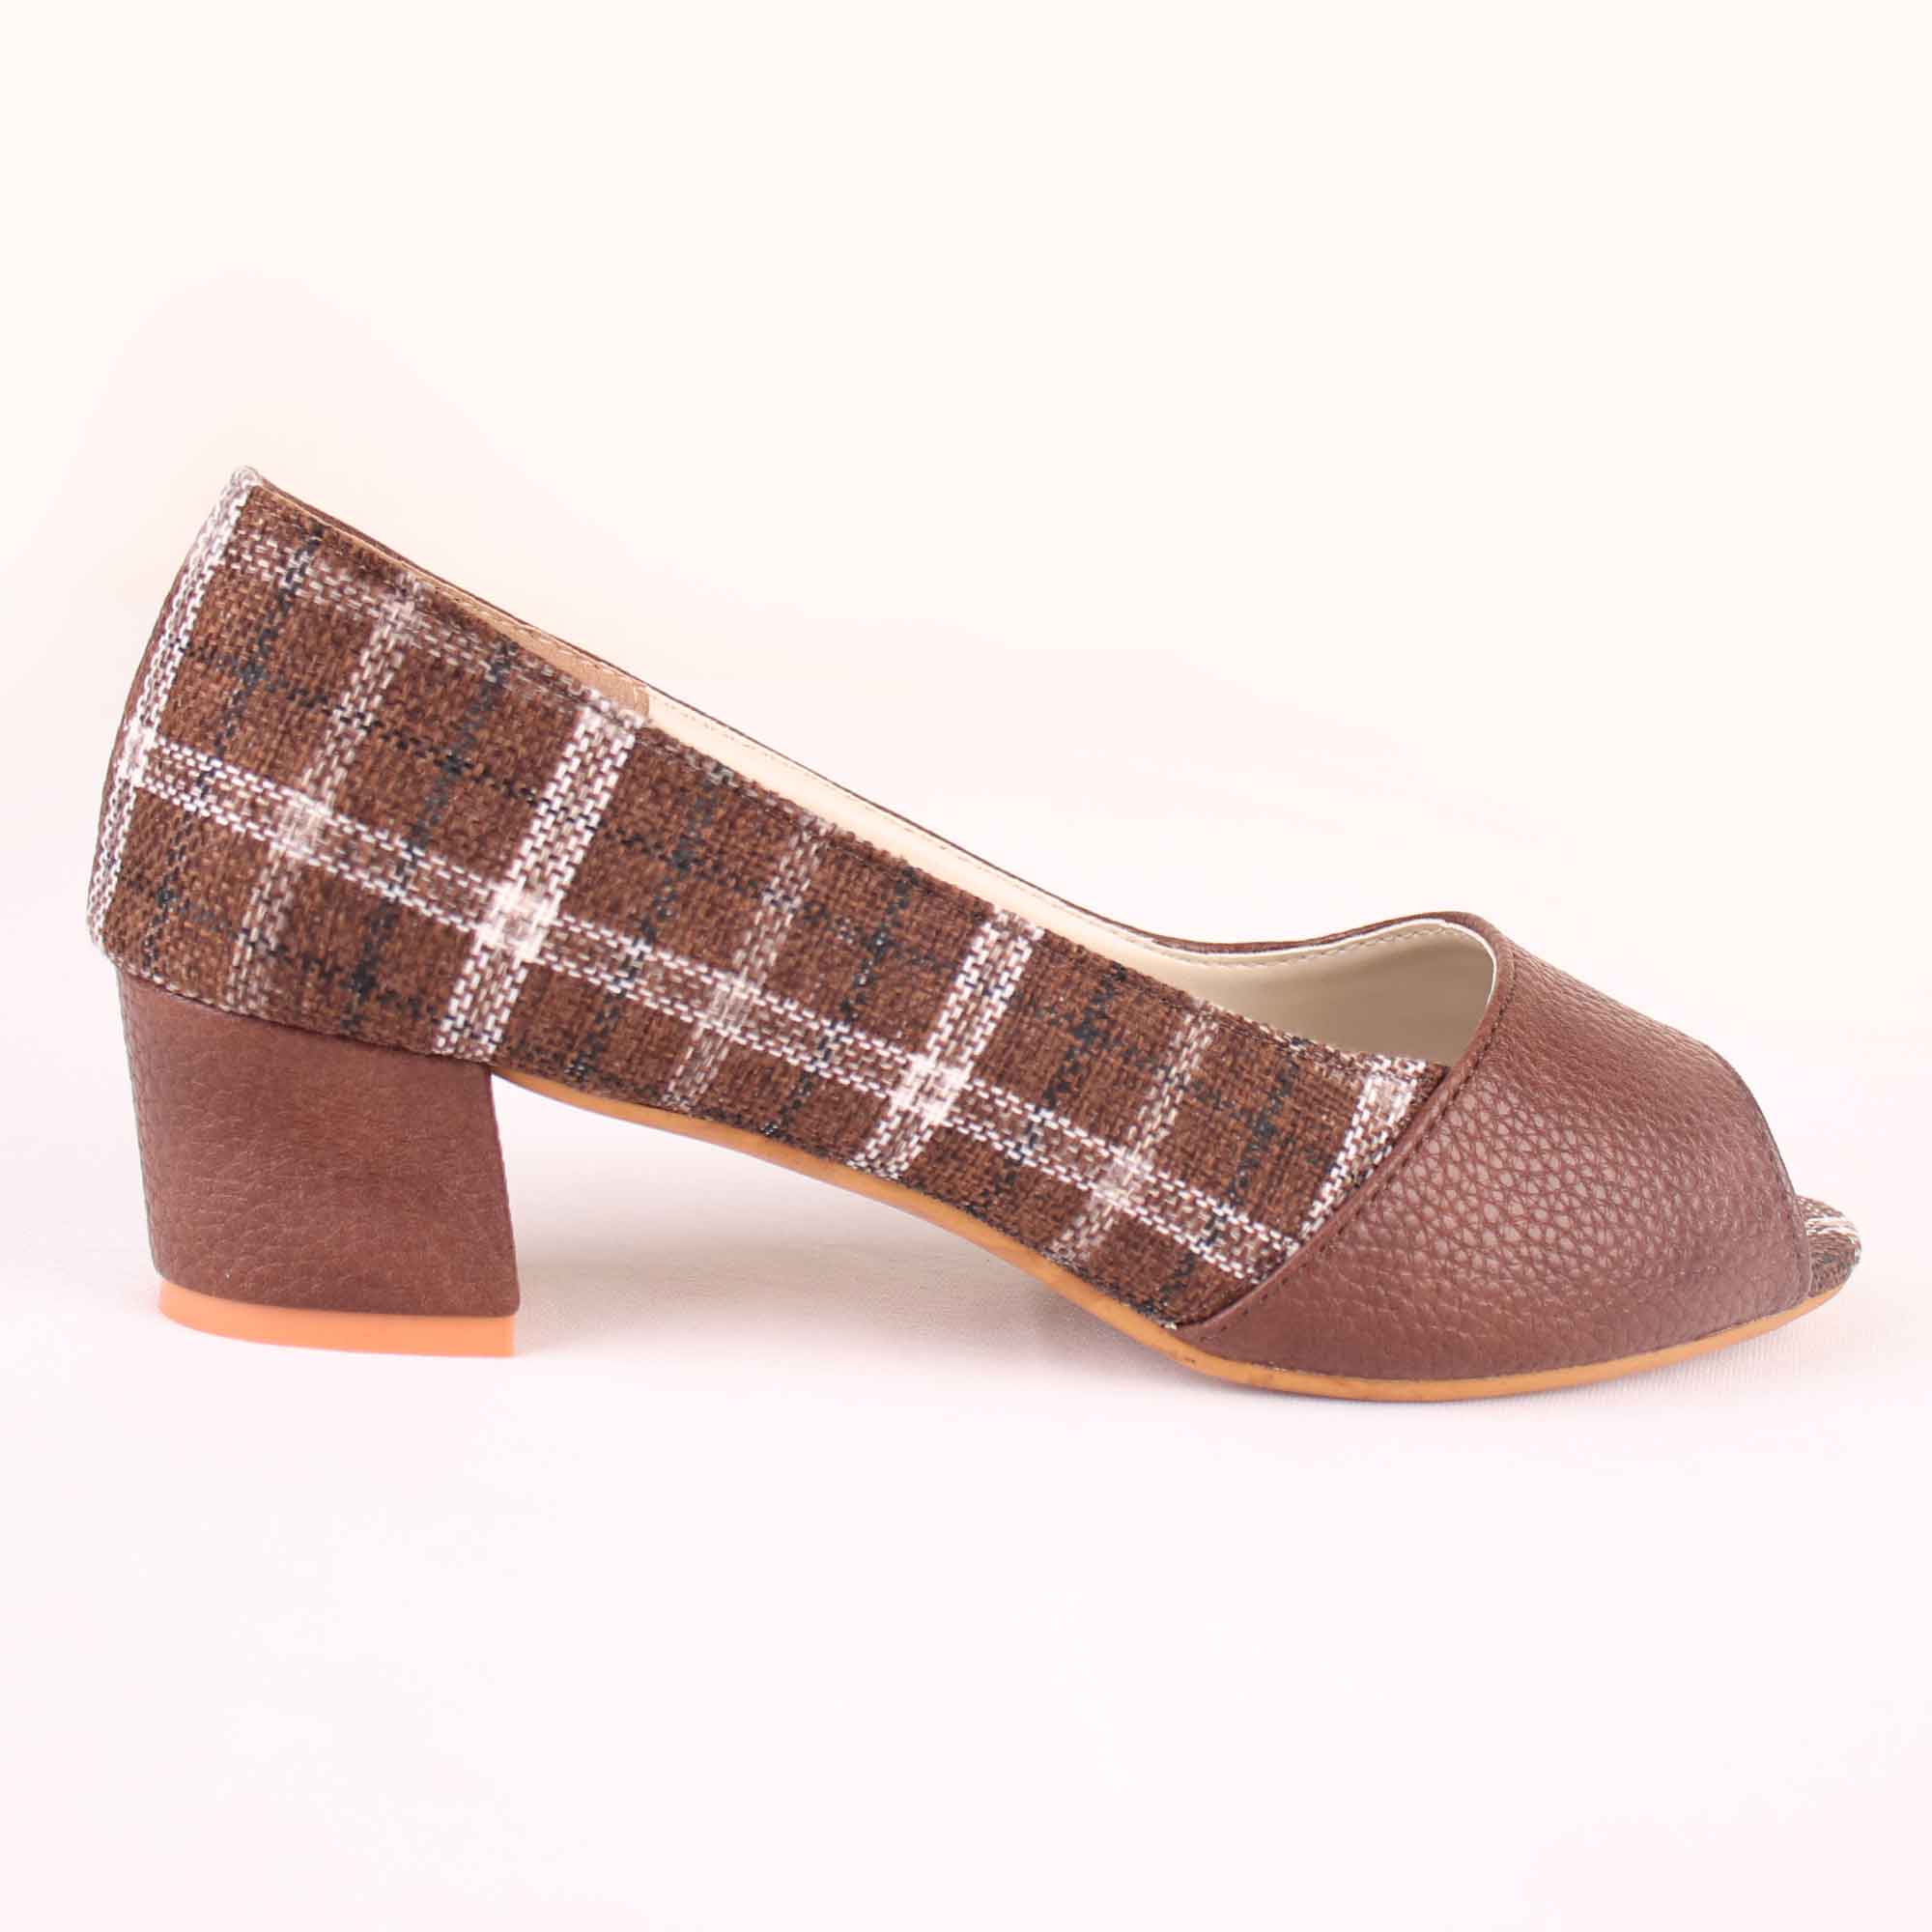 Glitz And Glam Rhinestone + Glitter Block Heels | Heels, Shoes heels classy,  Trending heels